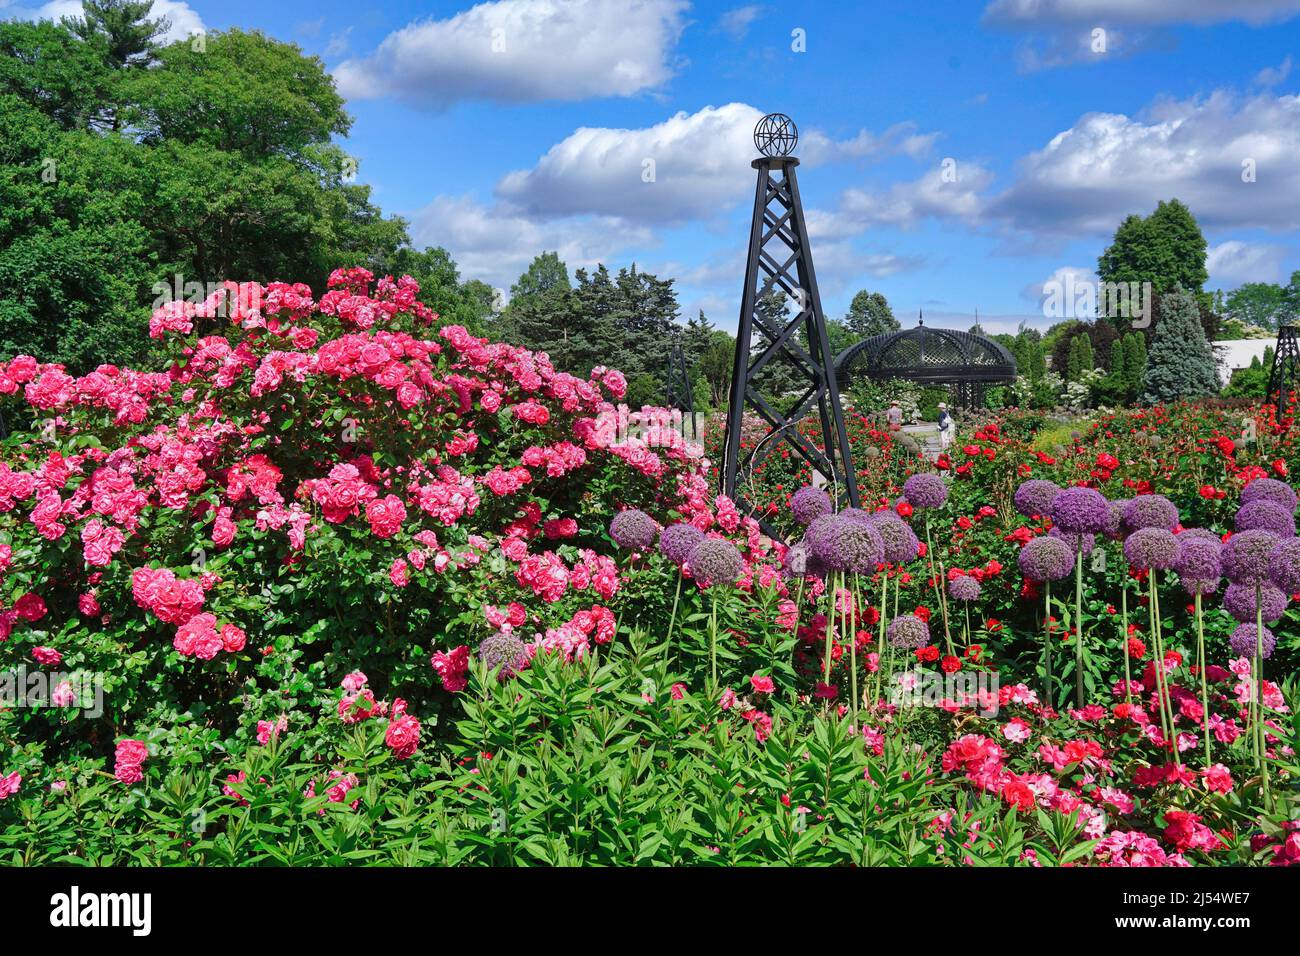 Leuchtend rosa und rote Rosen blühen im Rosengarten des Royal Botanical Gardens in Hamilton, Ontario, Kanada Stockfoto